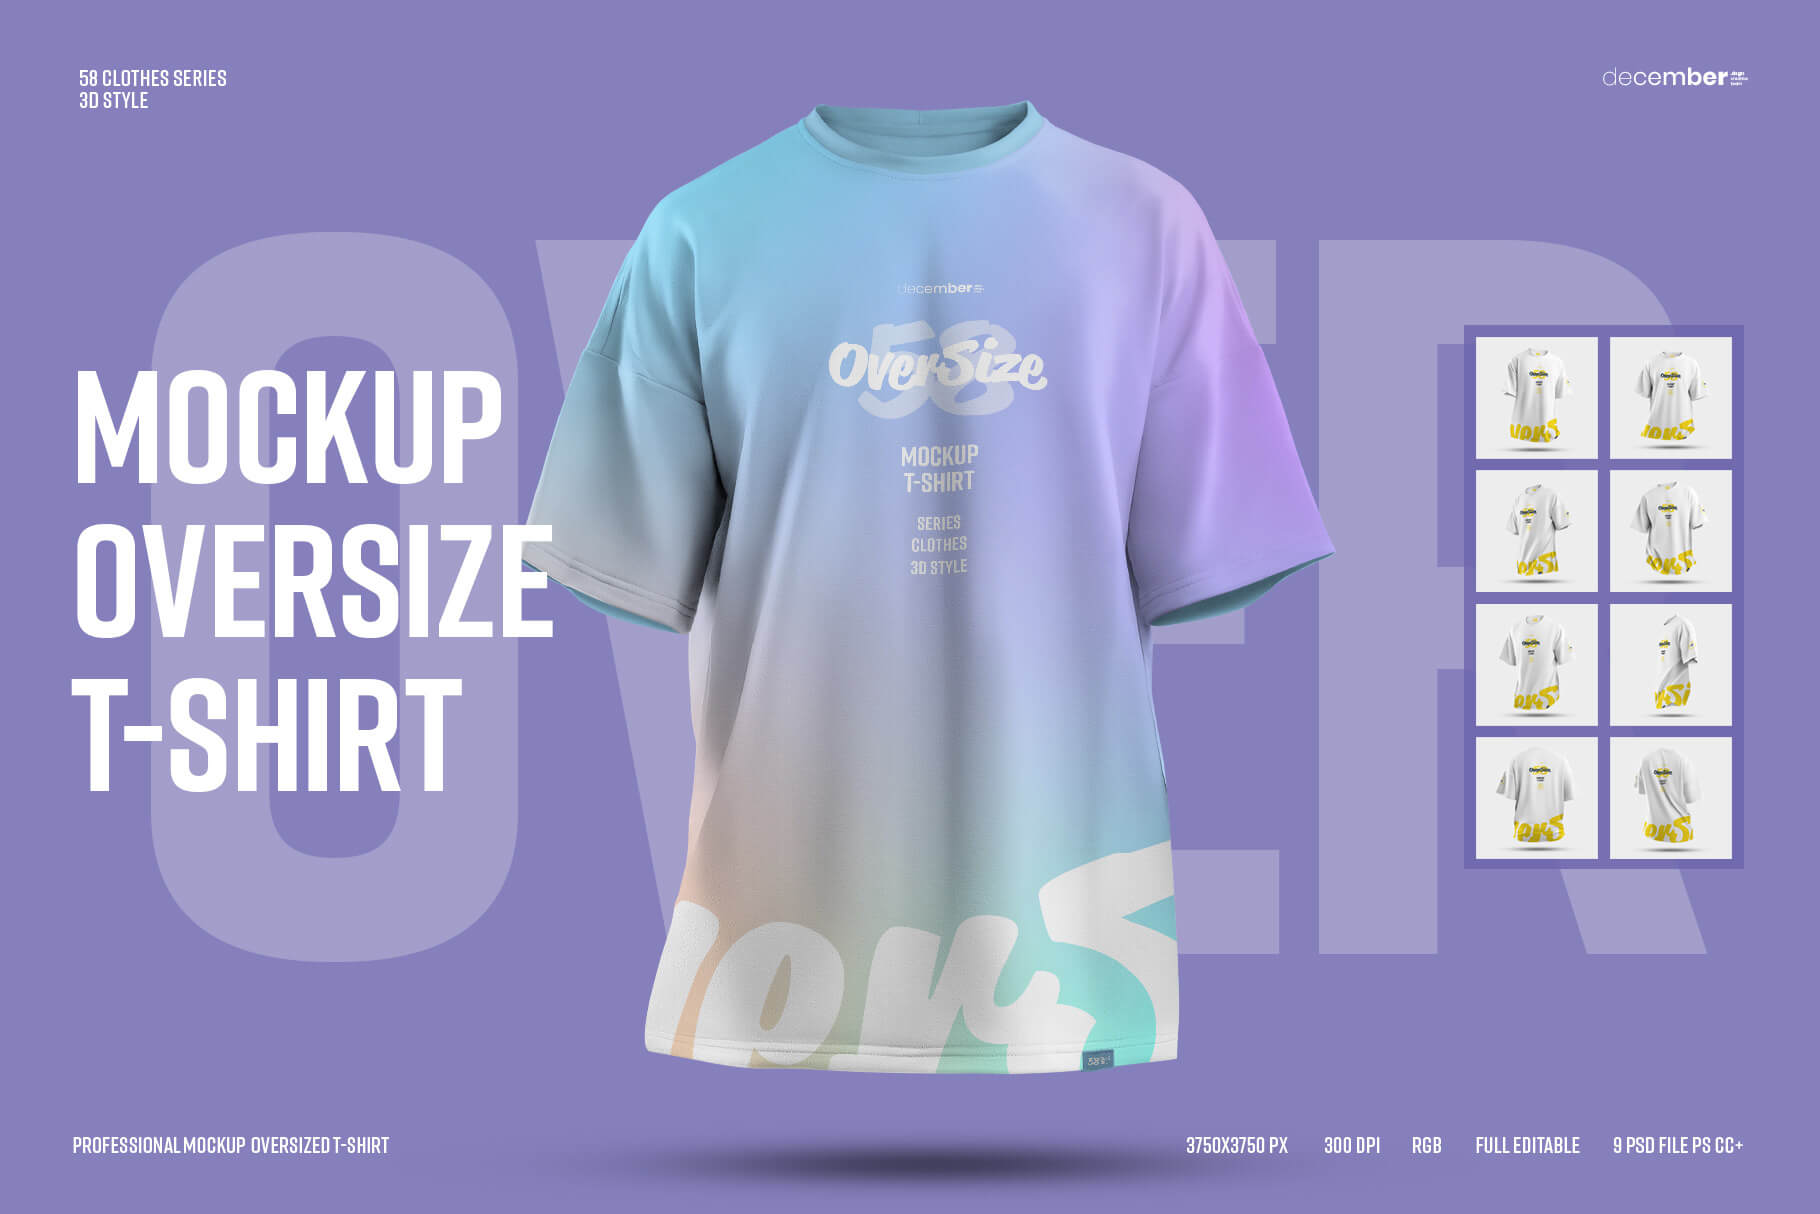 Free Oversize T-shirt Mockup PSD - PsFiles